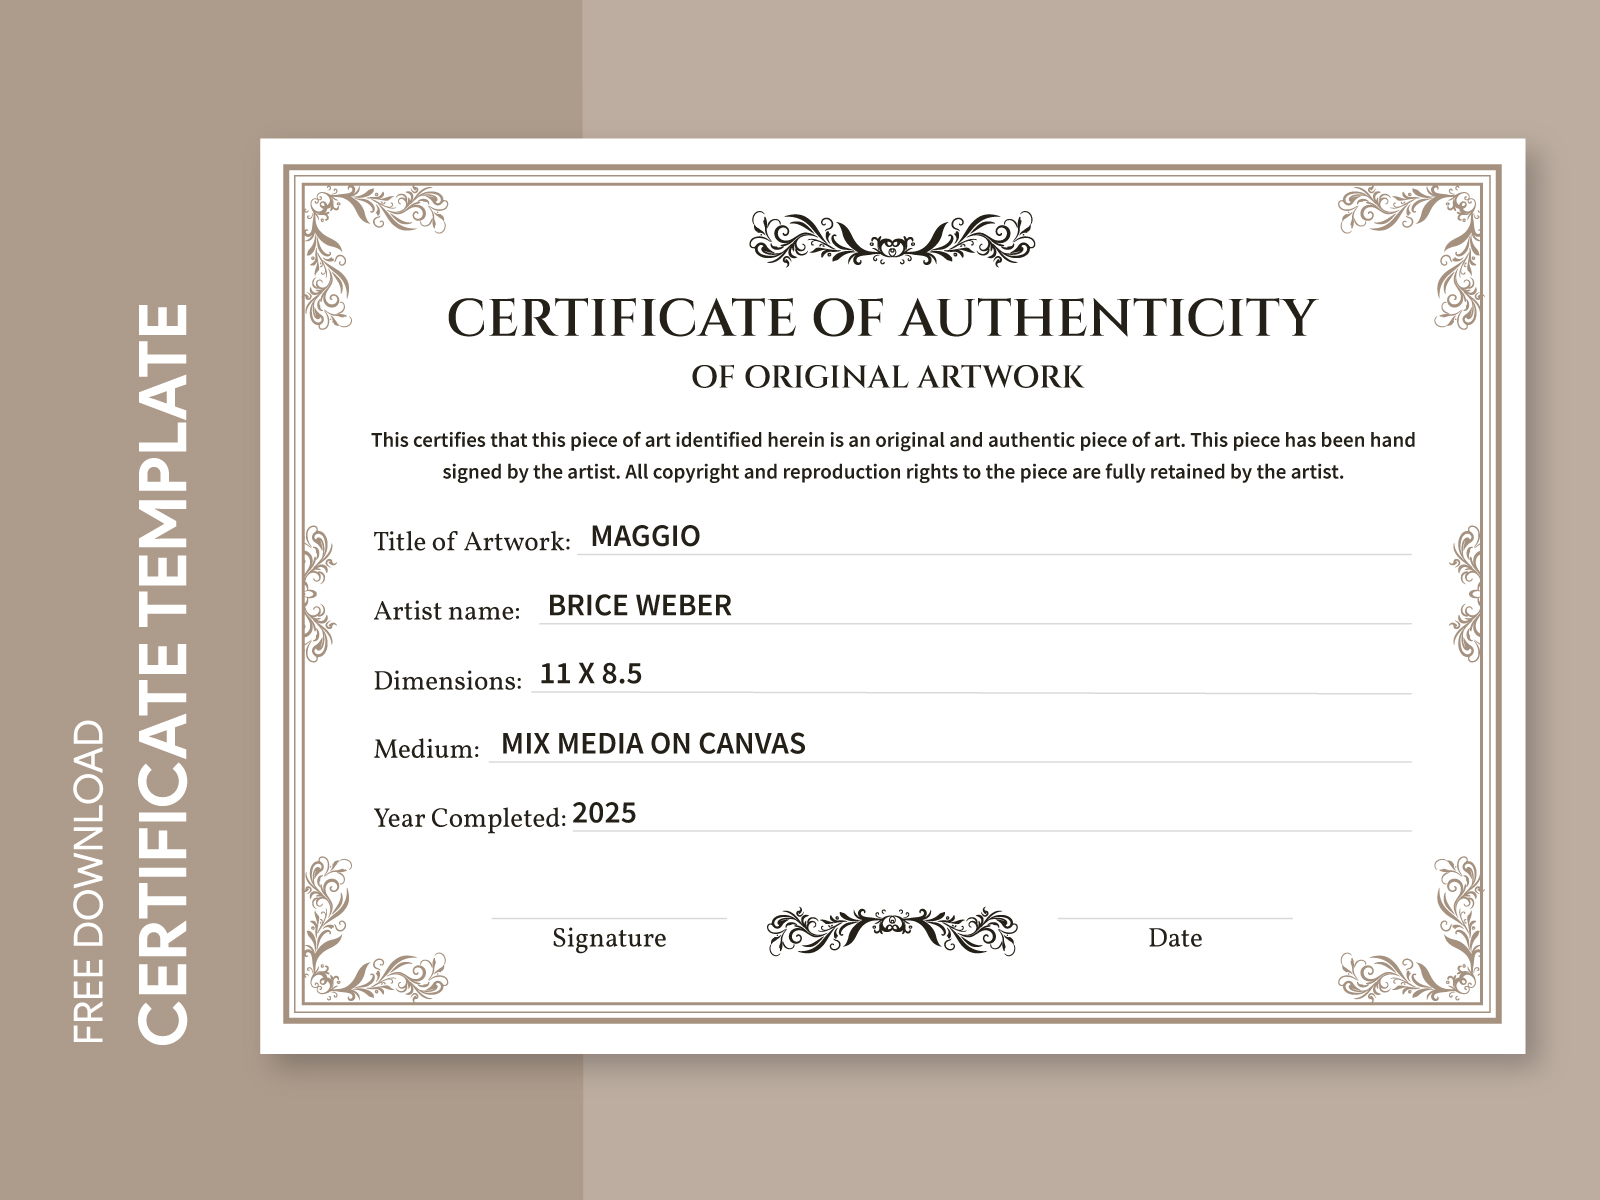 Certificate of Authenticity Free Google Docs Template gdoc io